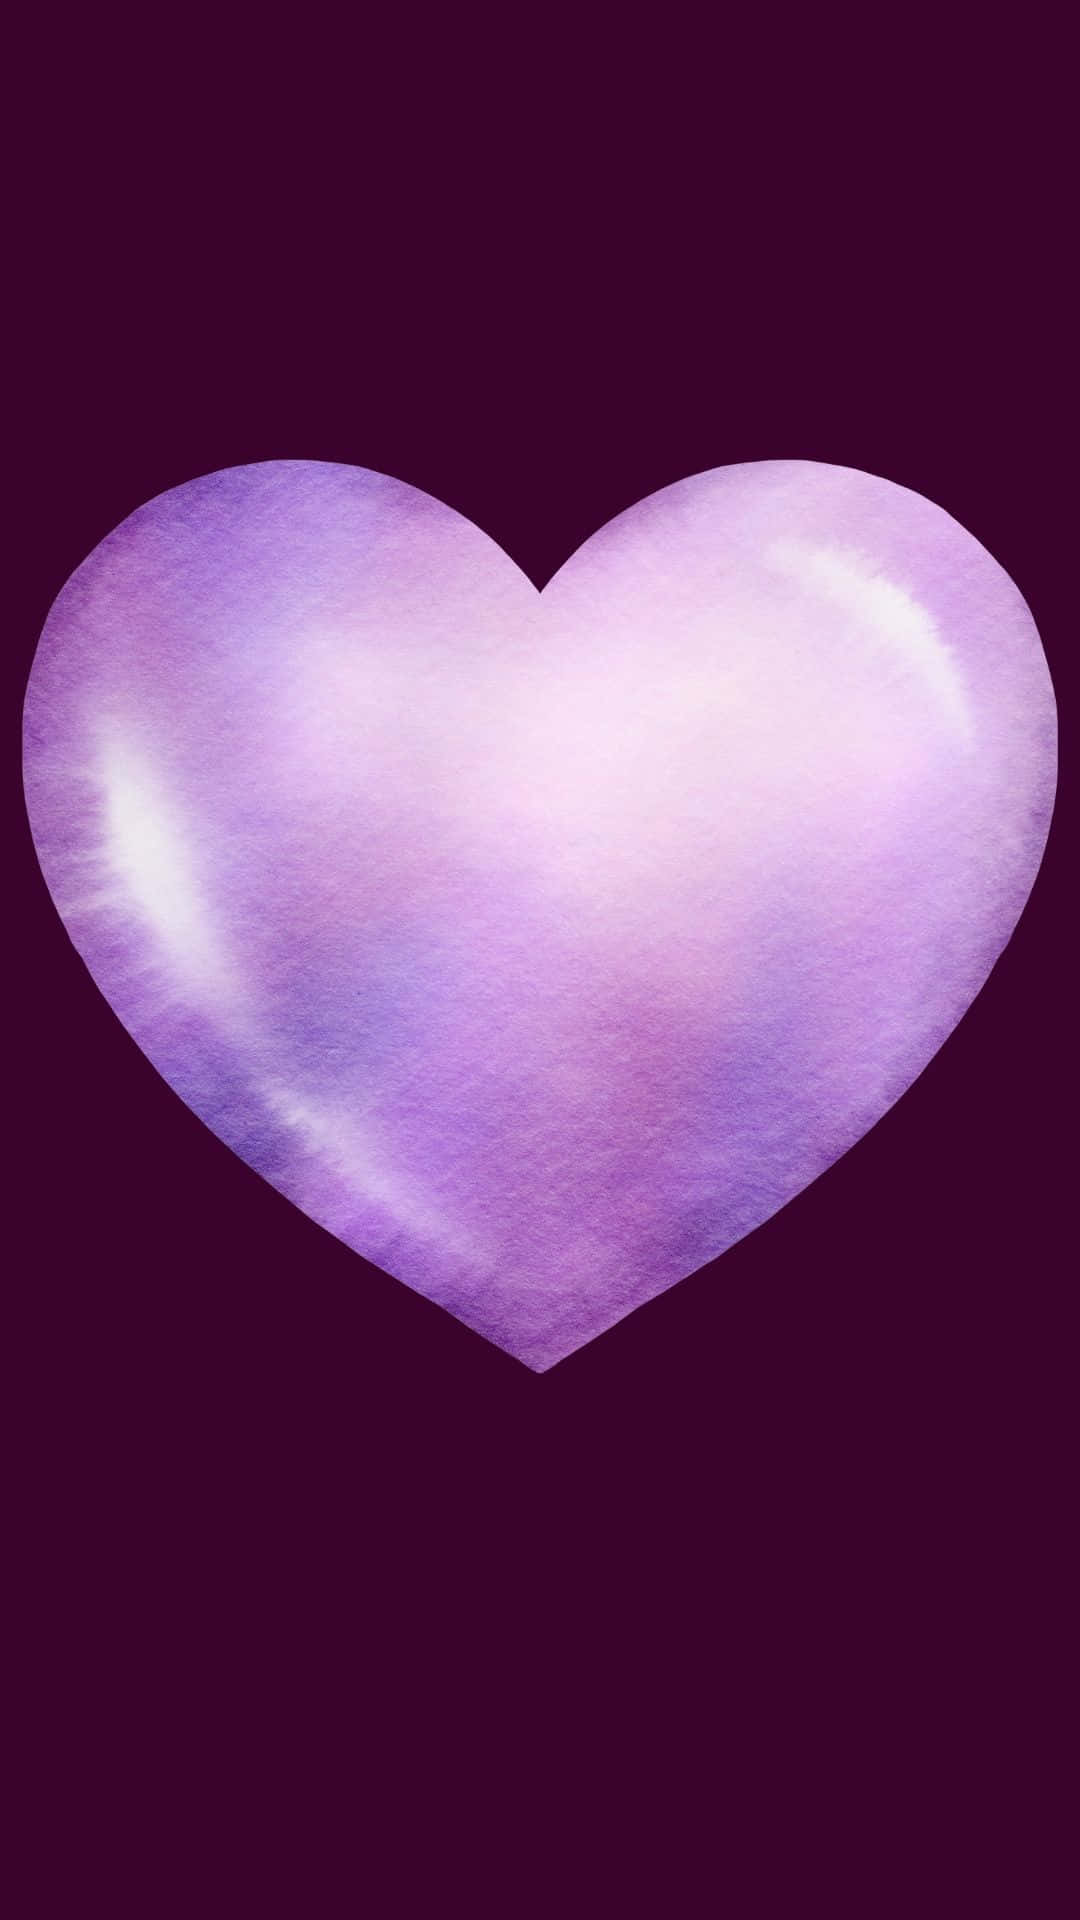 A Purple Heart of Appreciation